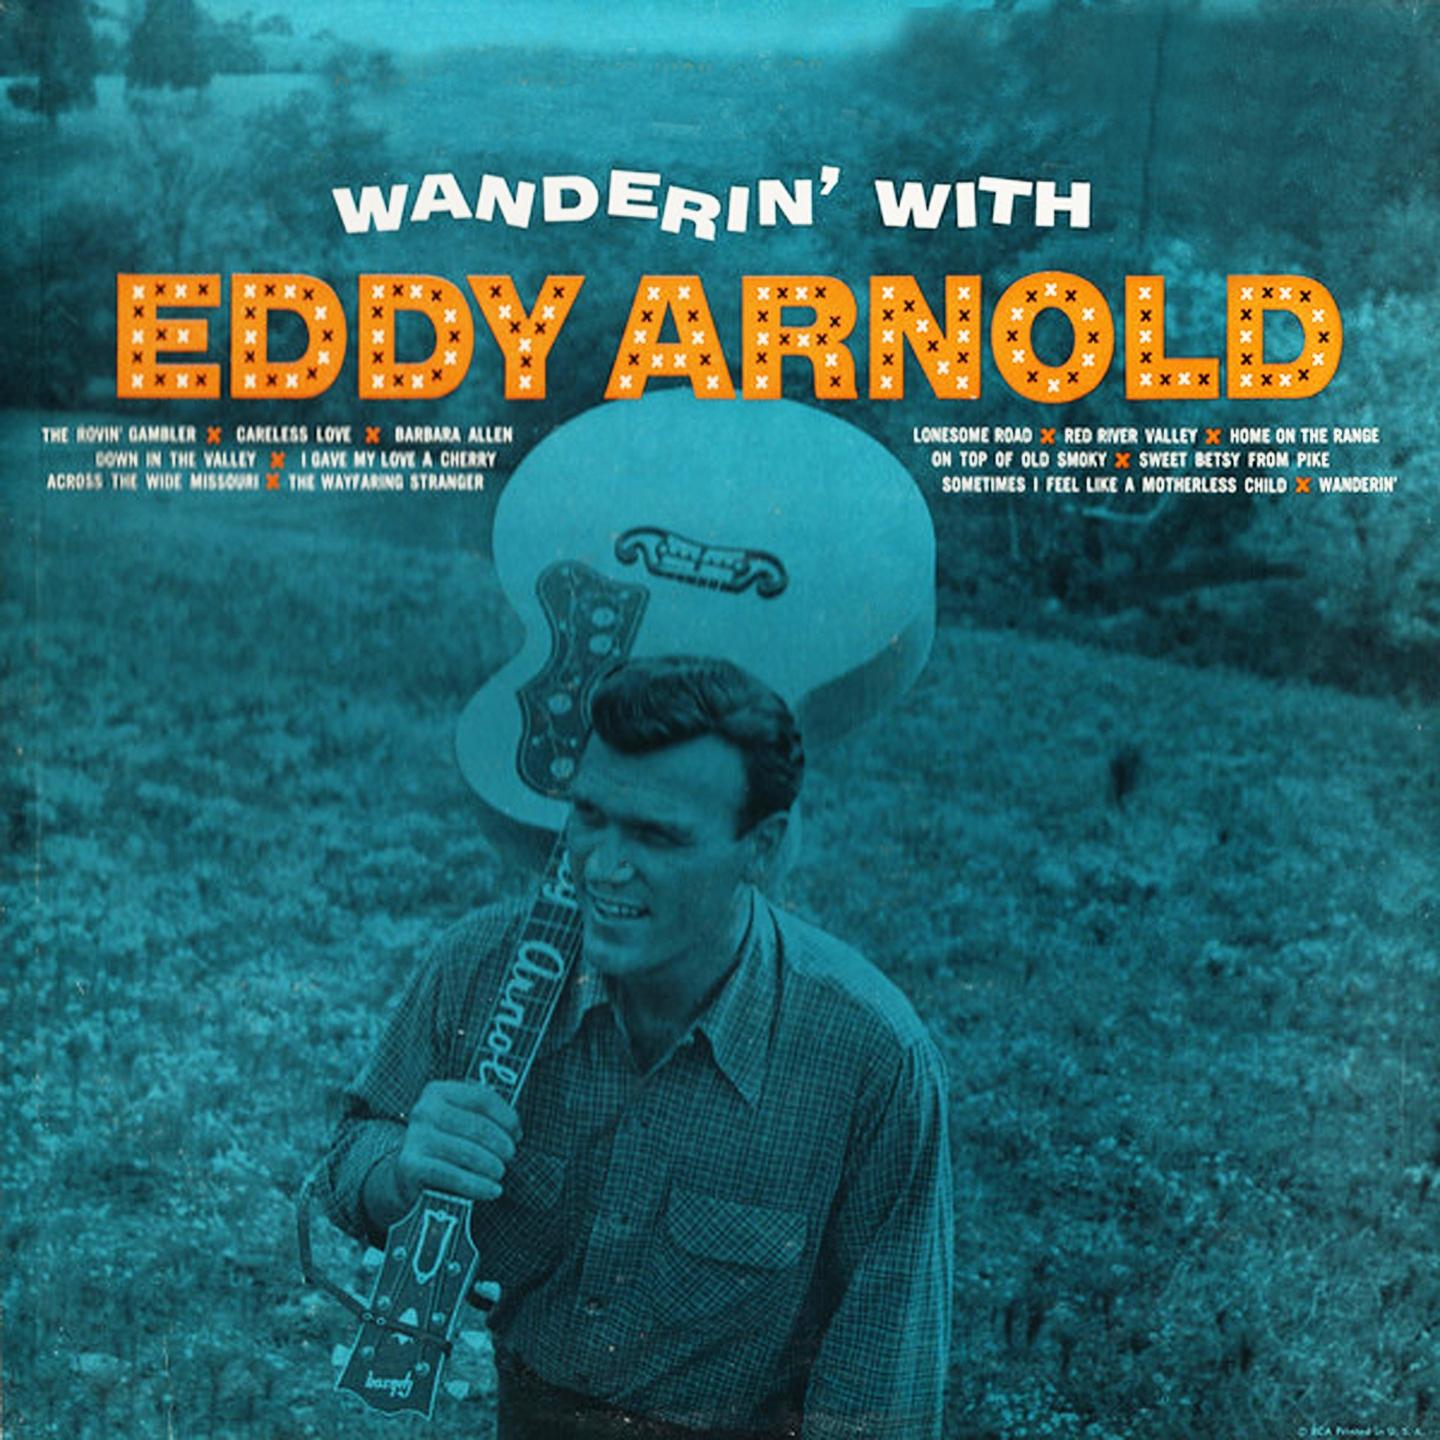 Wanderin' With Eddy Arnold